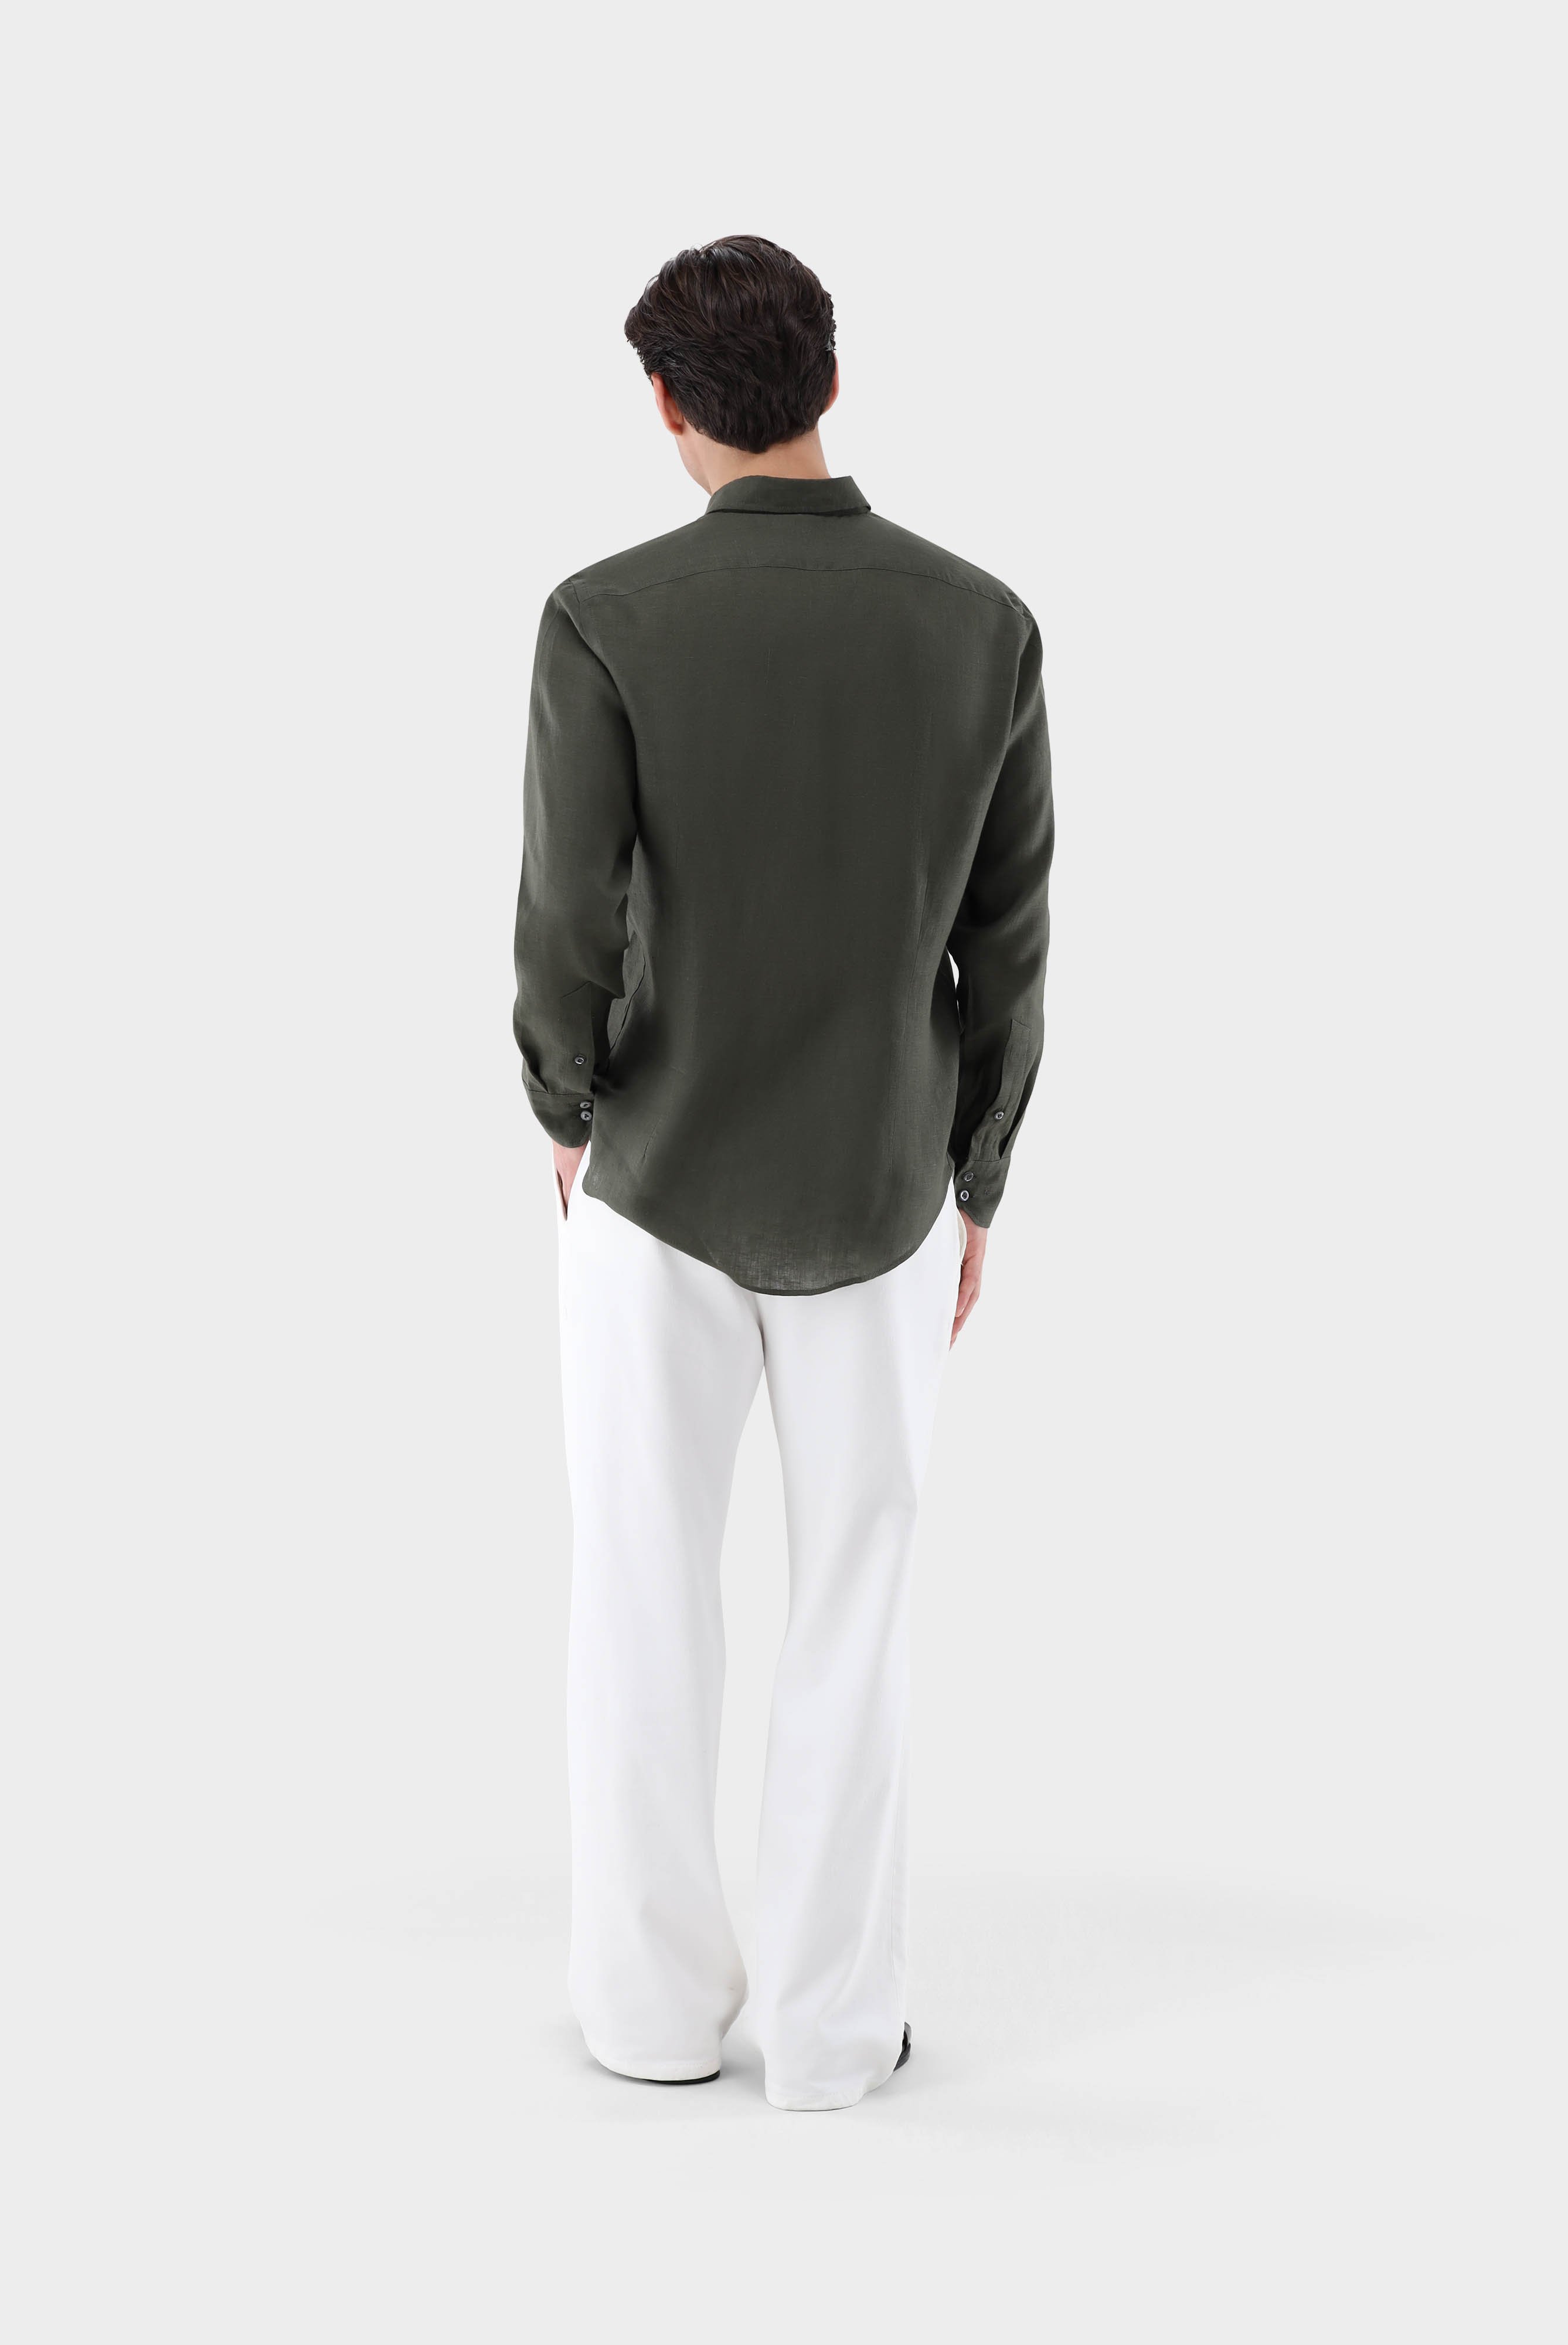 Casual Shirts+Linen Button-Down Collar Shirt+20.2013.9V.150555.990.38